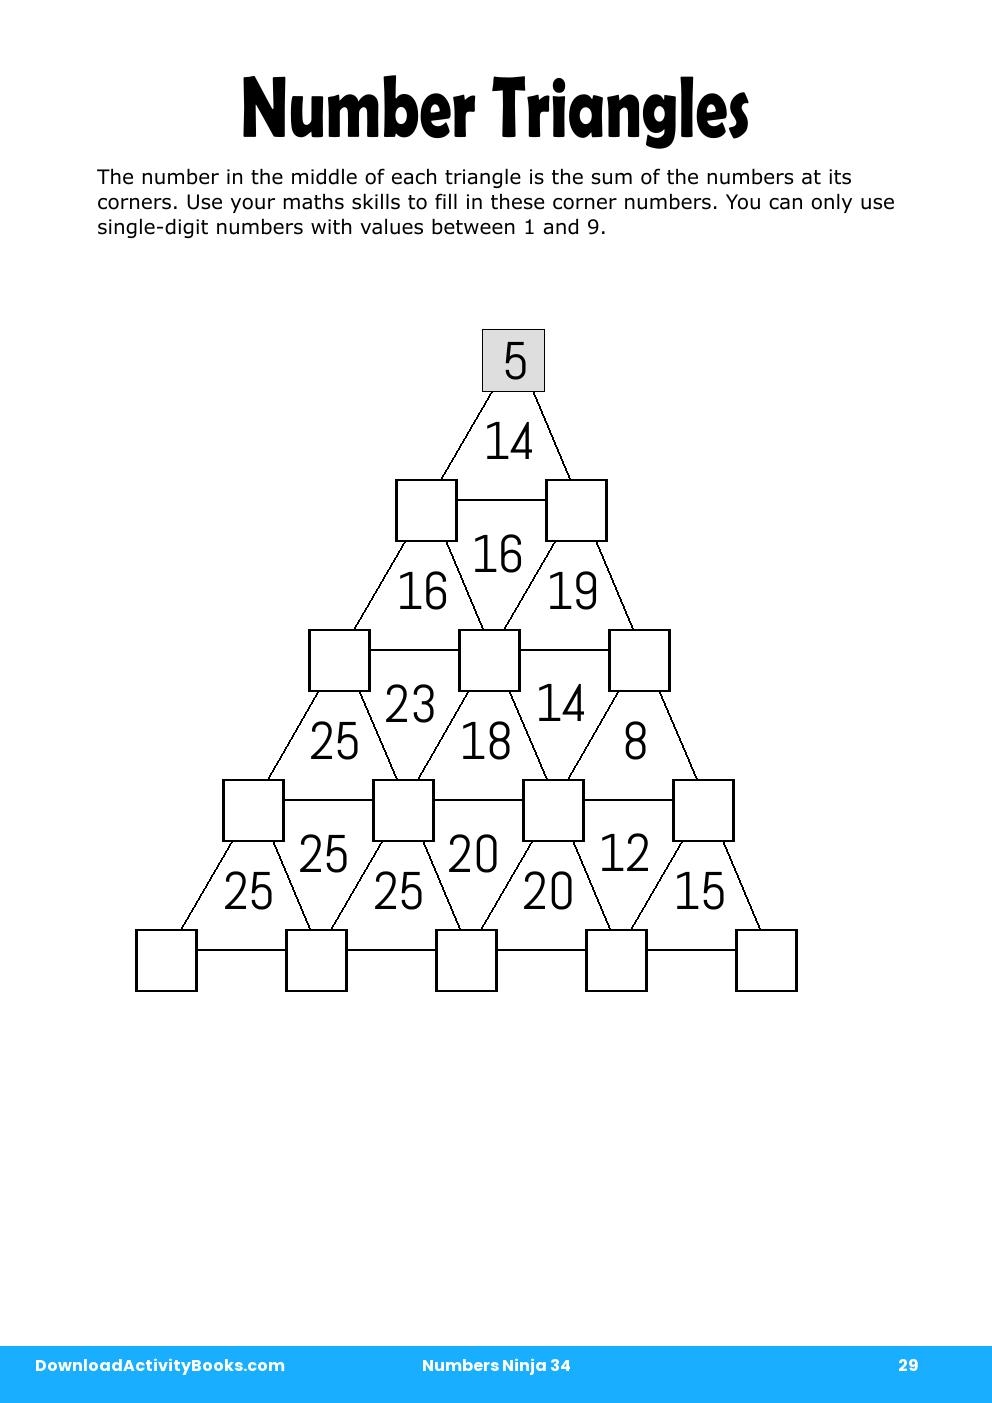 Number Triangles in Numbers Ninja 34